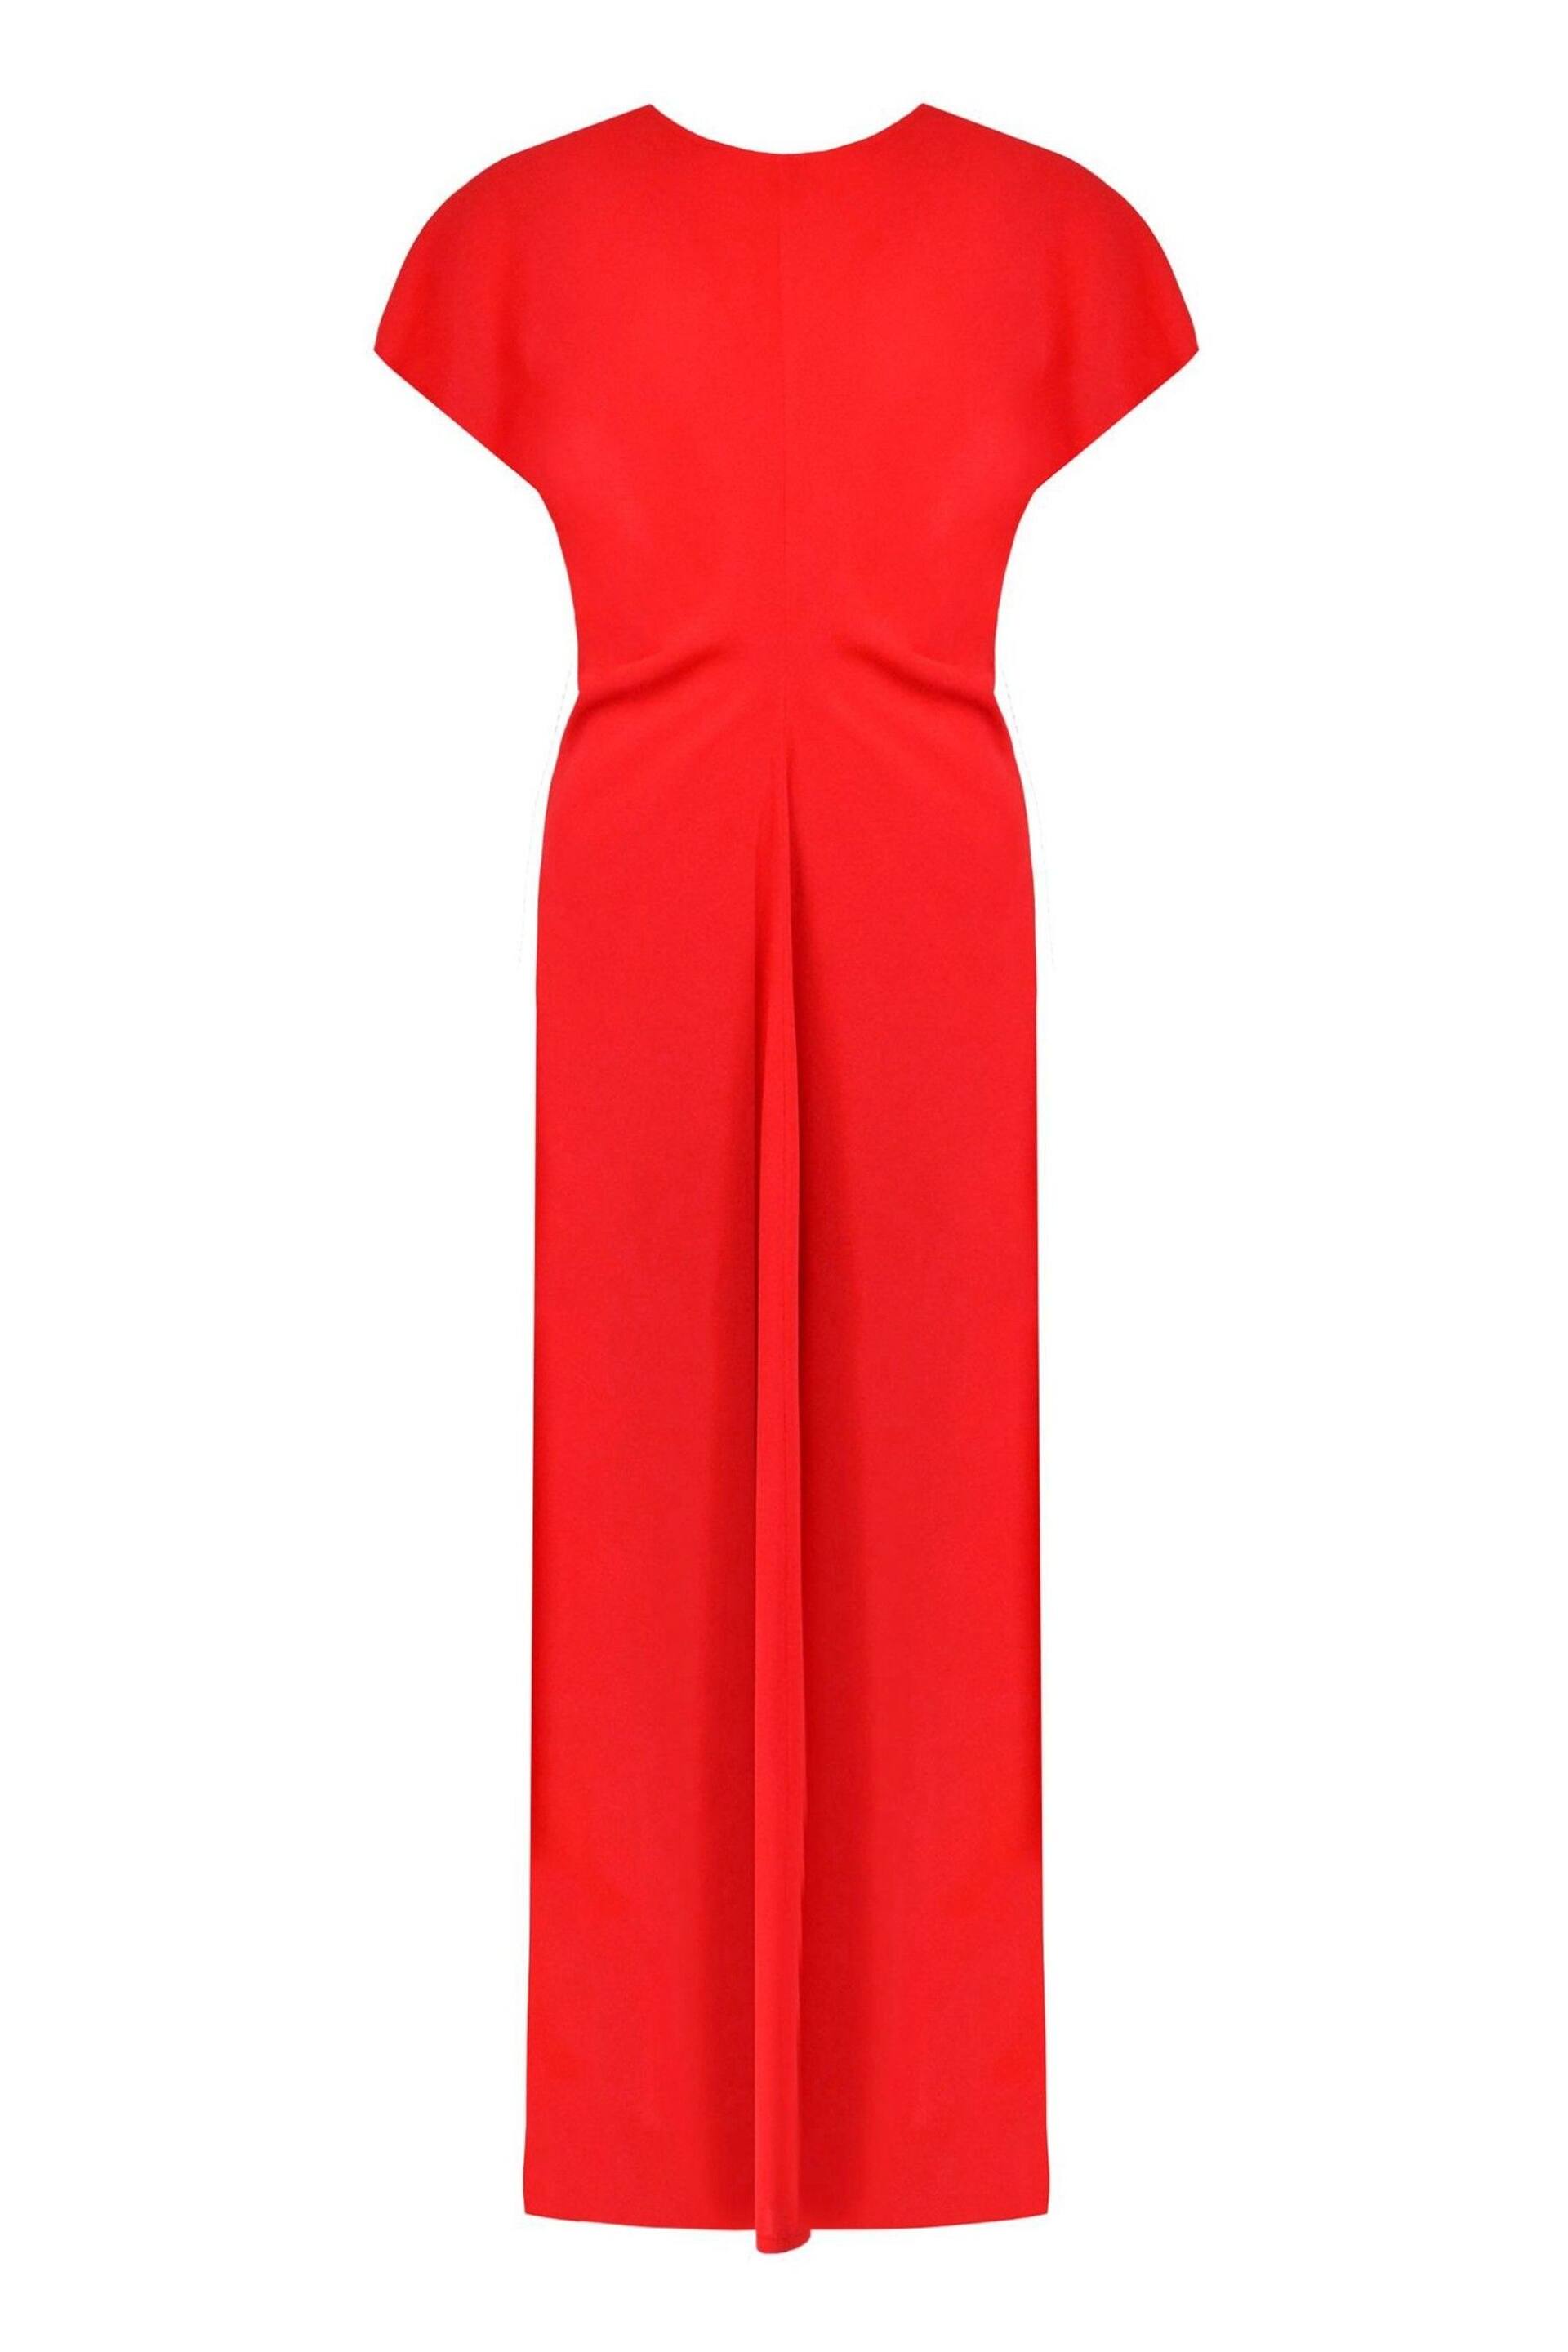 Ro&Zo Red Petite Harper Flutter Sleeve Midaxi Dress - Image 5 of 5